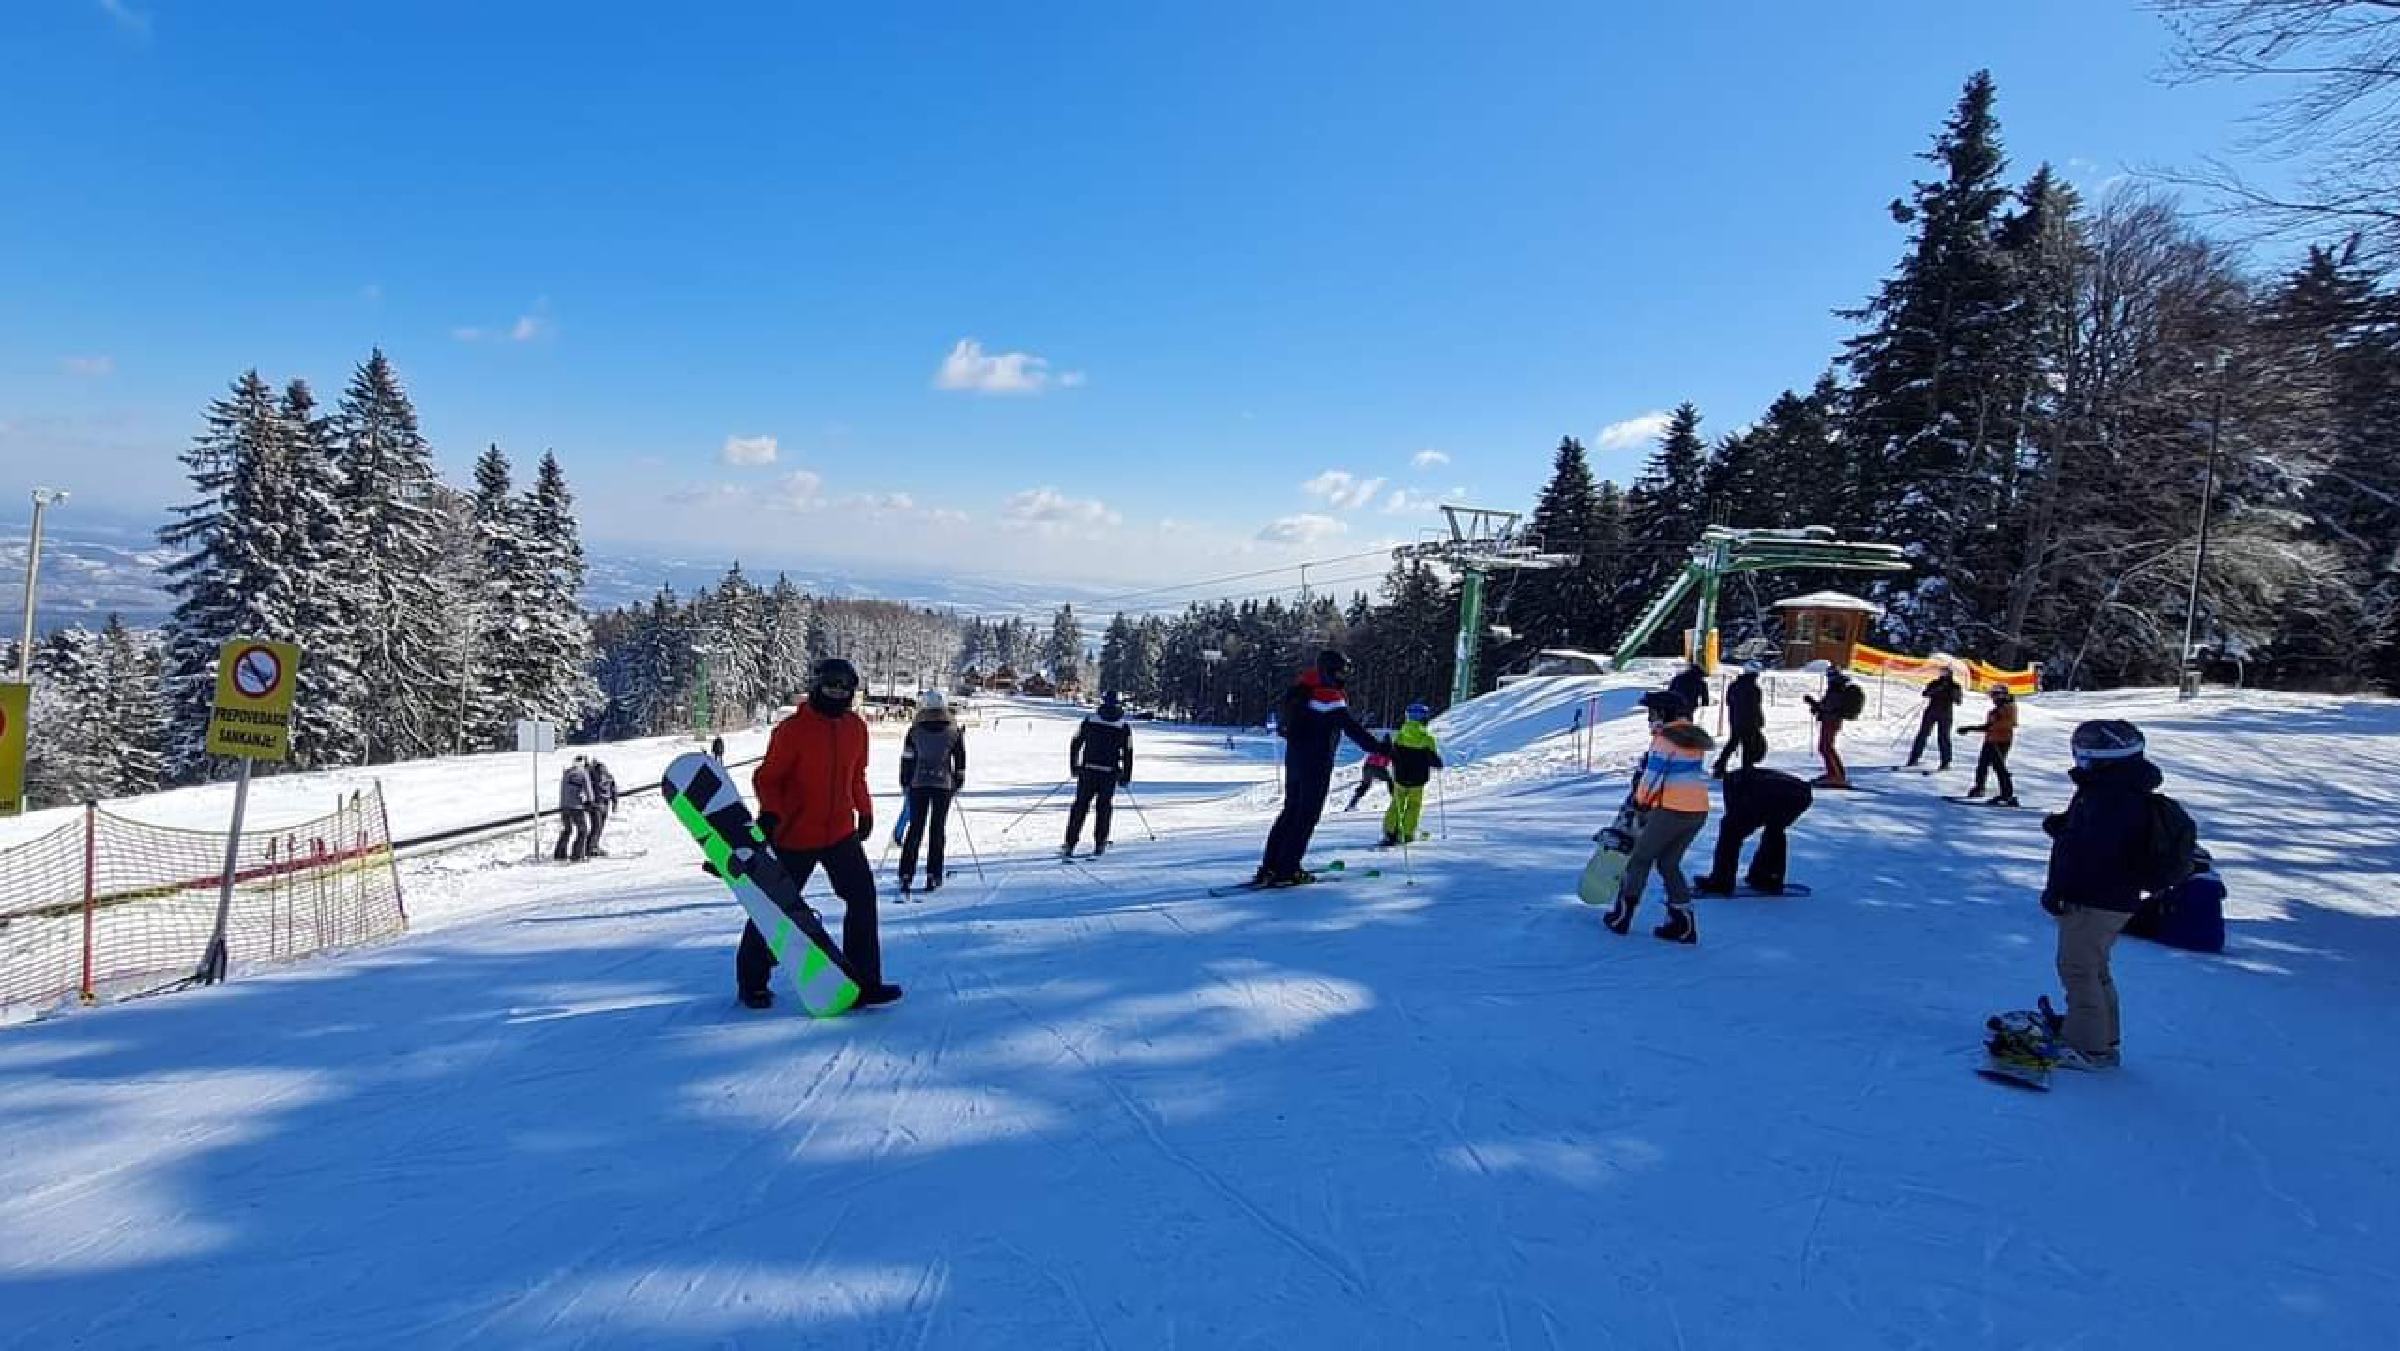 V Maribor se vrača tradicionalni Zimski športni vikend